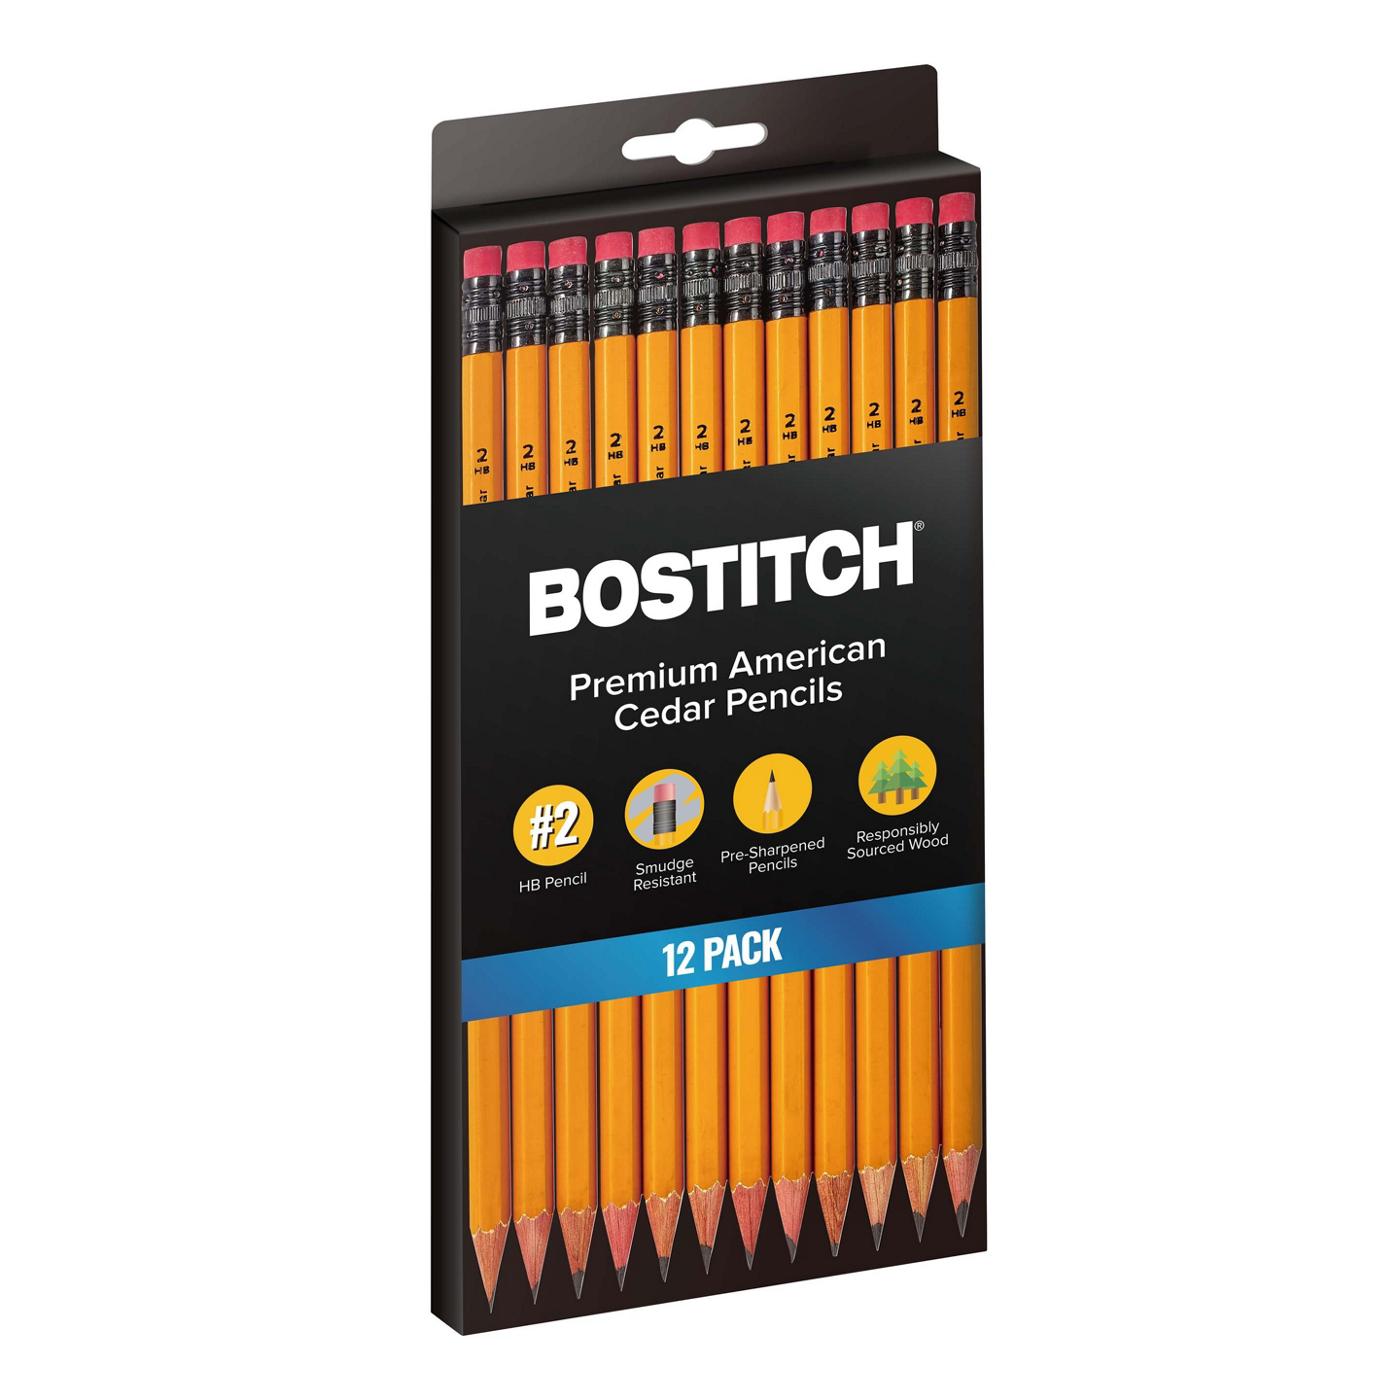 Bostitch Premium No.2 American Cedar Pencils; image 1 of 2